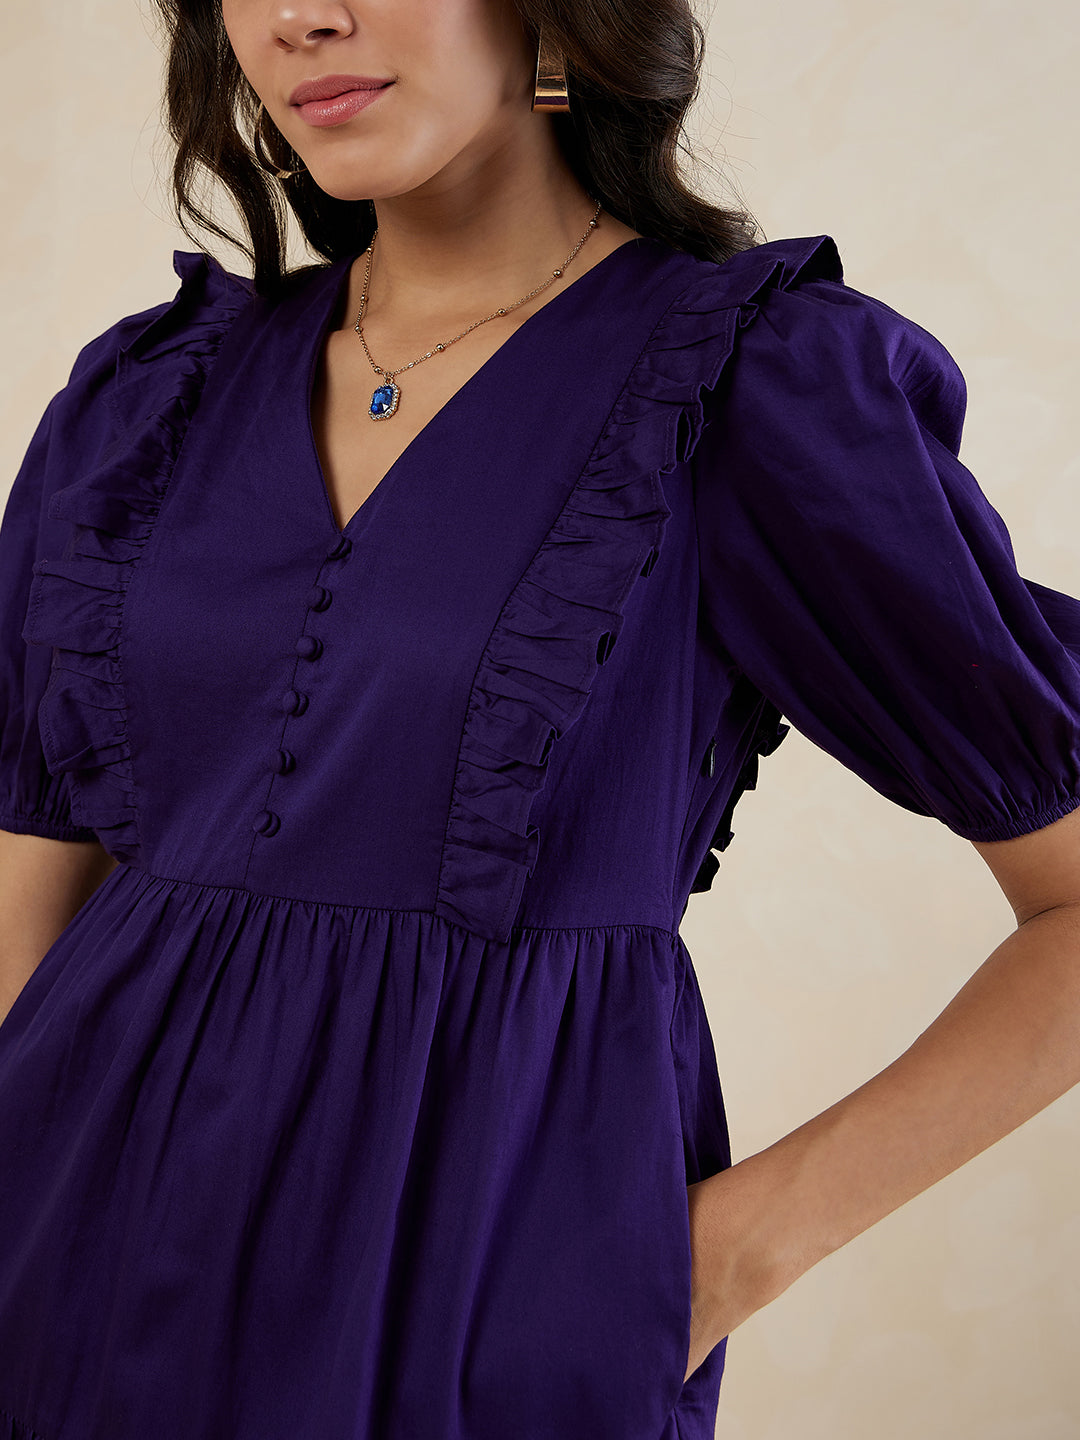 Purple Cotton Ruffle Tiered Midi Dress